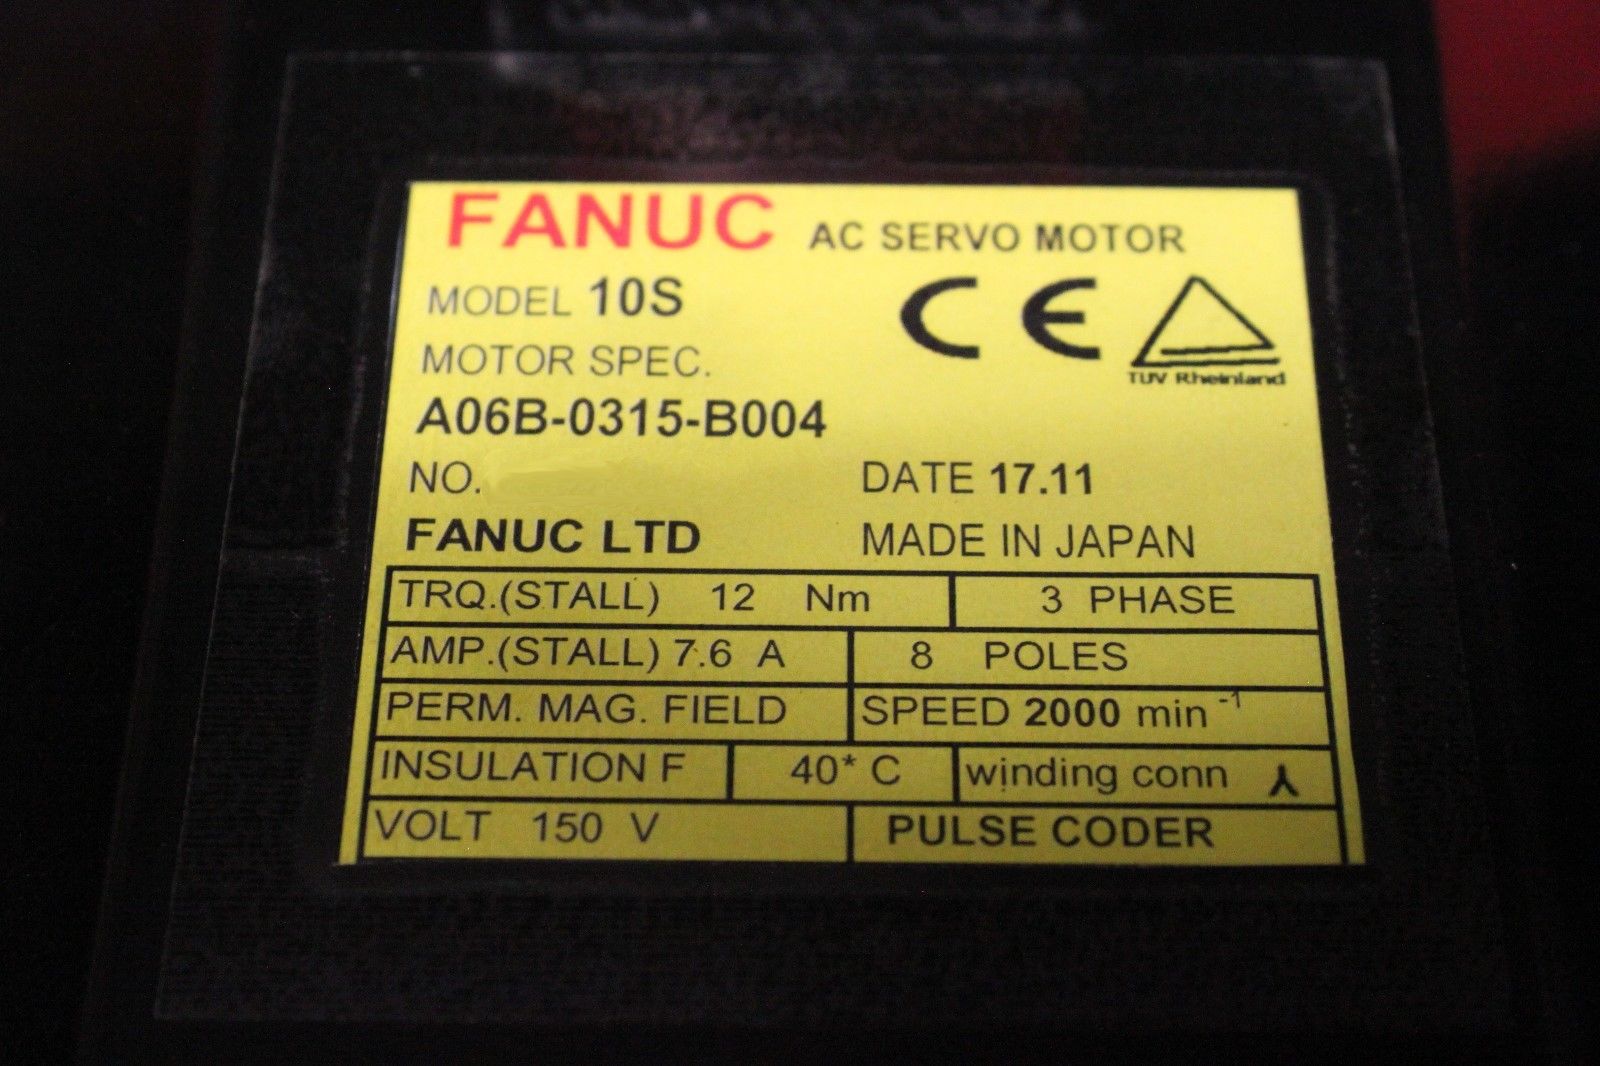 Fanuc A06B-0315-B004 AC Servo Motor